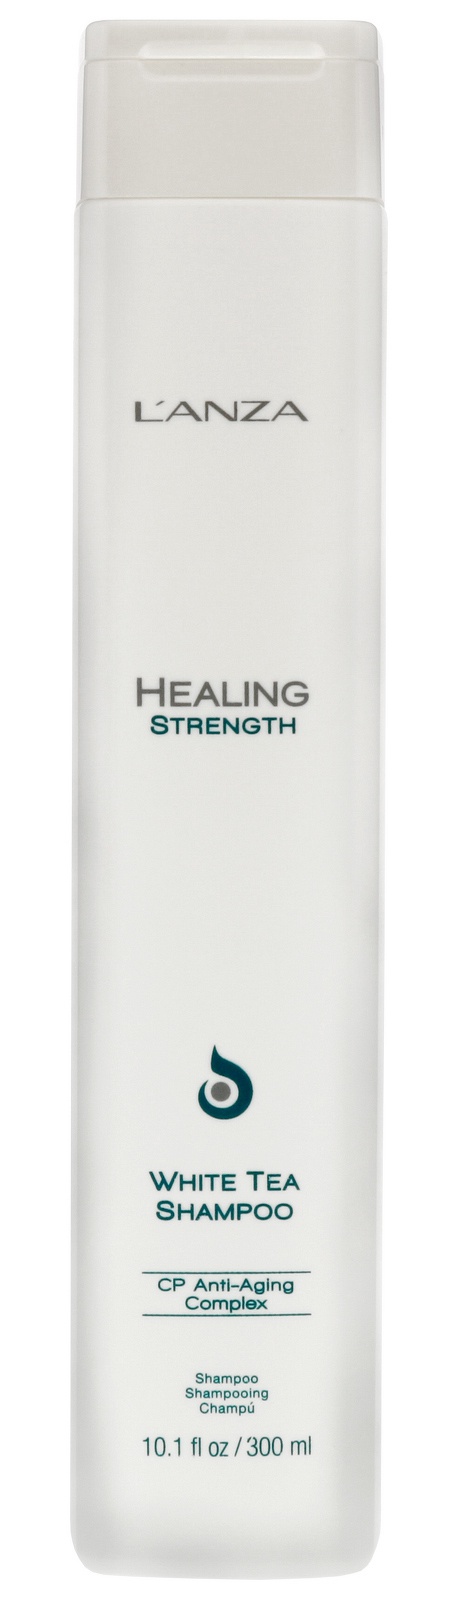 L’anza Healing Strength White Tea Shampoo